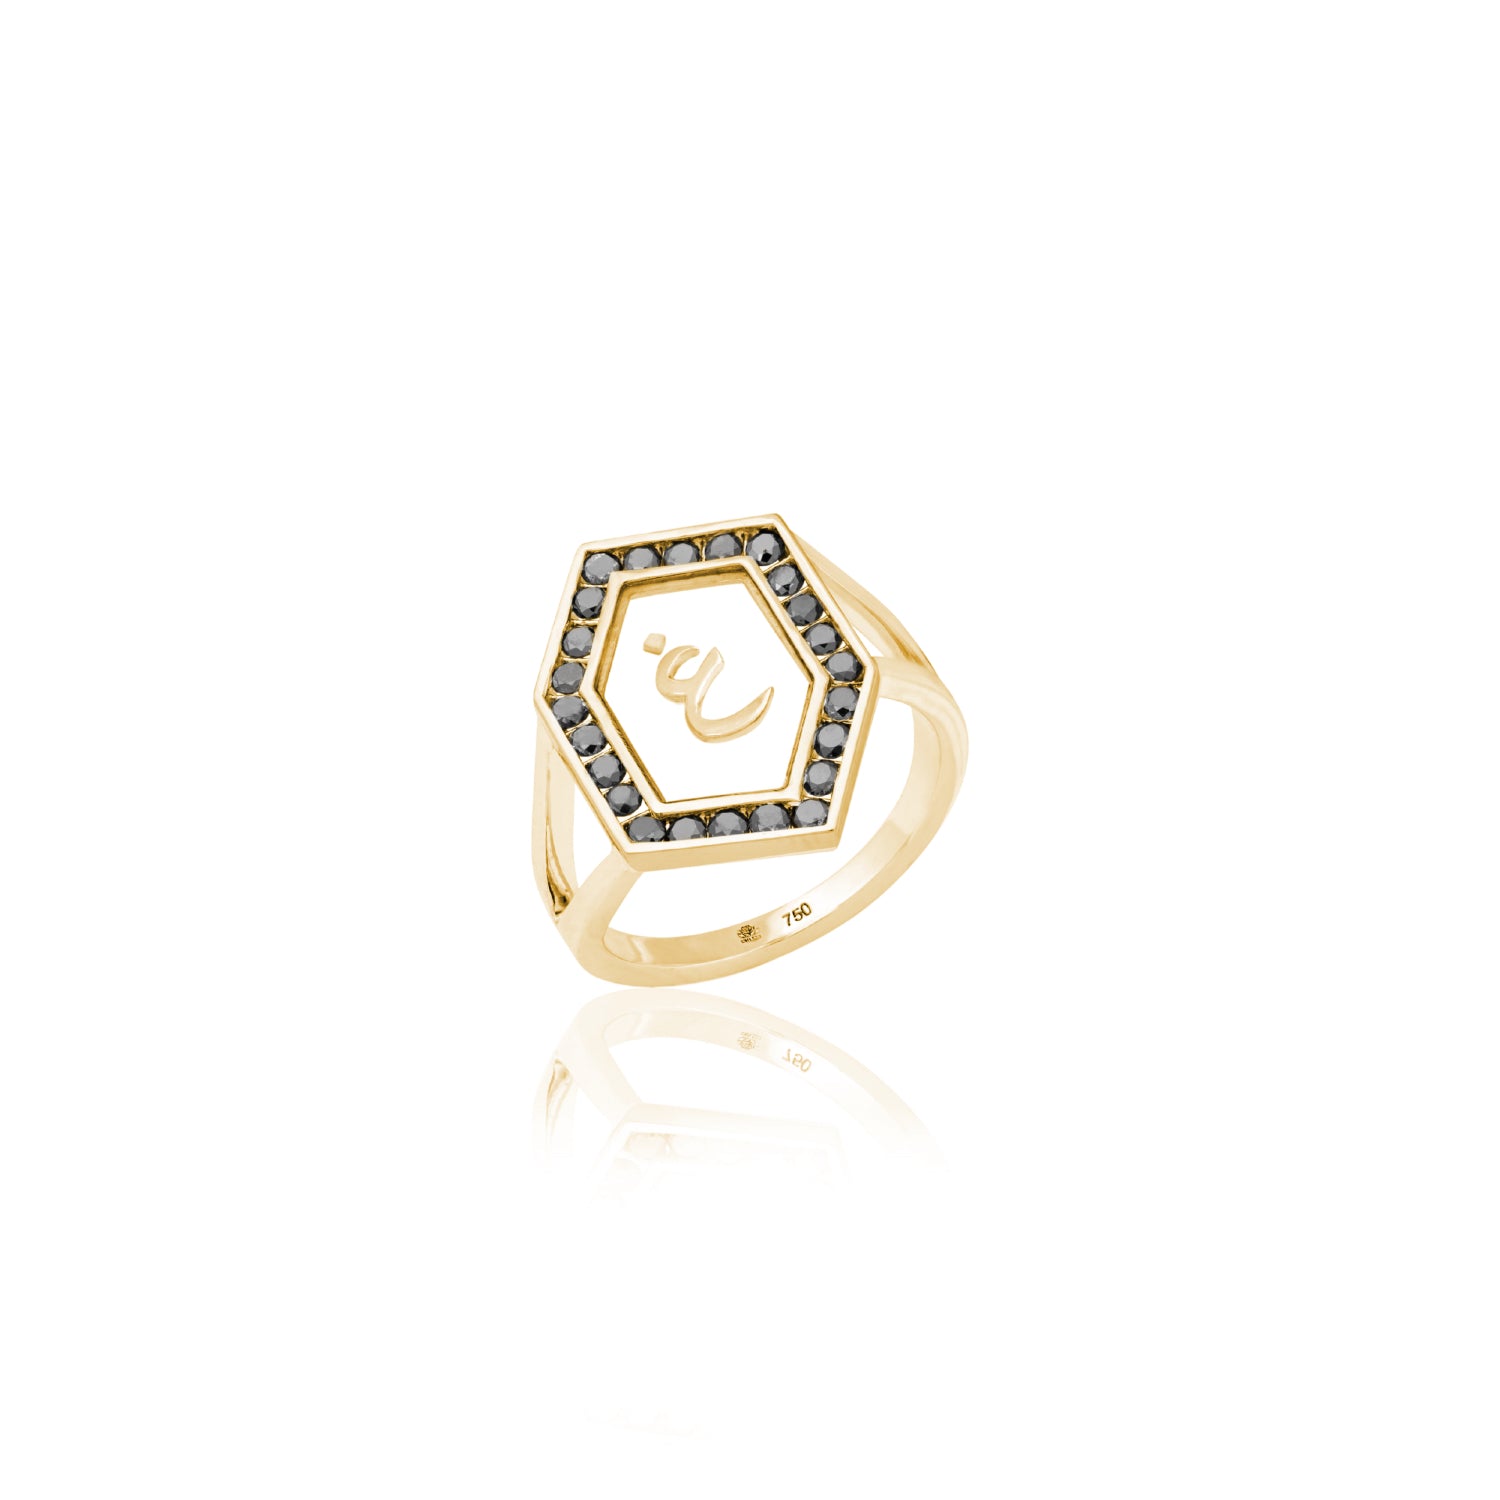 Qamoos 1.0 Letter غ Black Diamond Ring in Yellow Gold